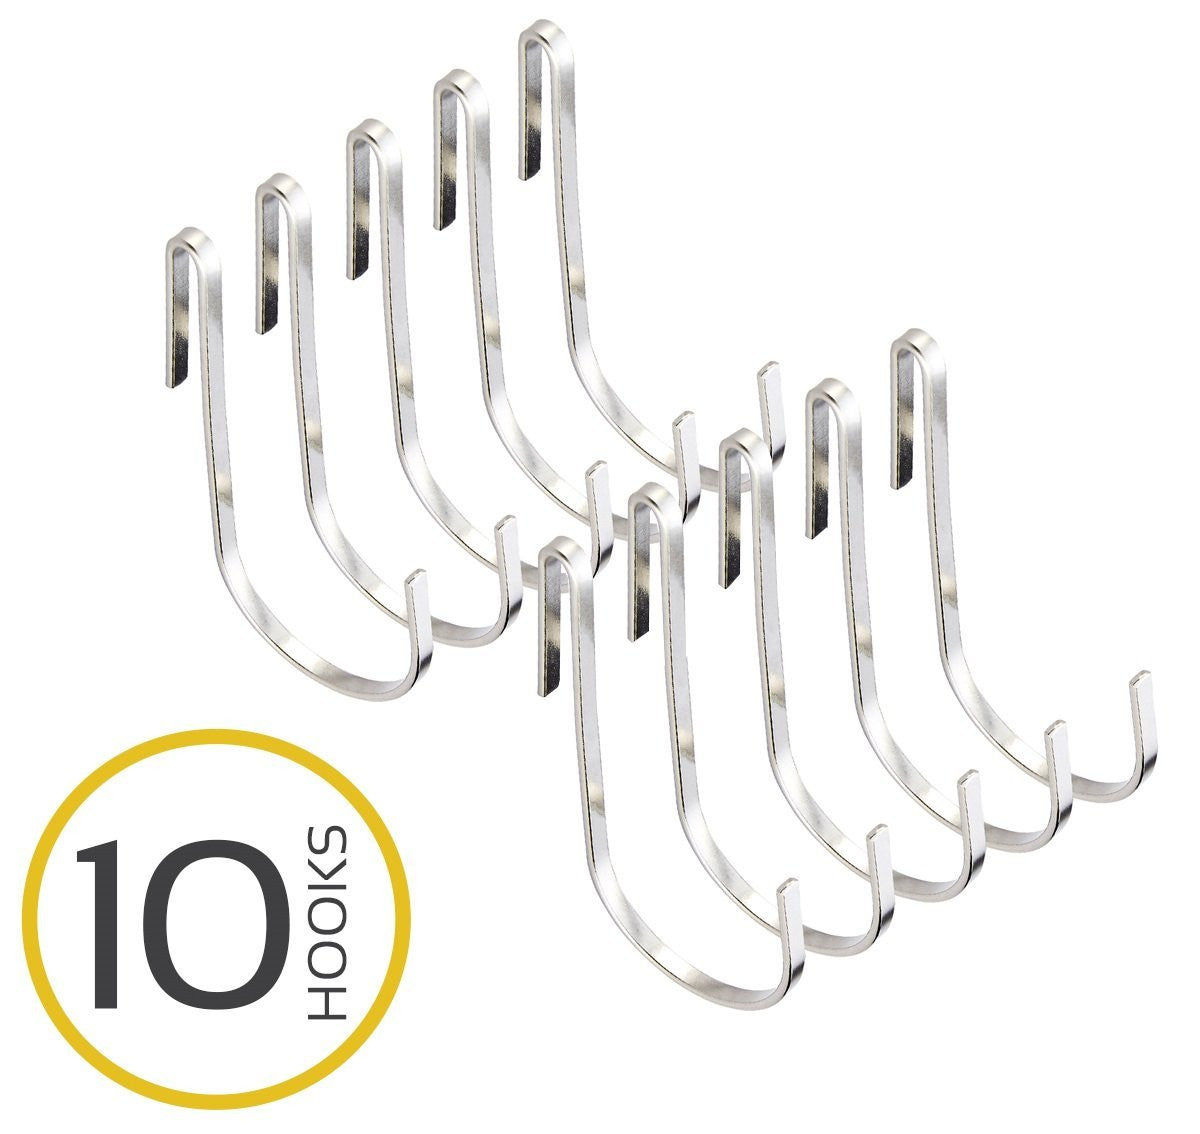 Heavy-duty S-hooks For Kitchen & Bathroom Organization - Stainless Steel  Coat Hanger